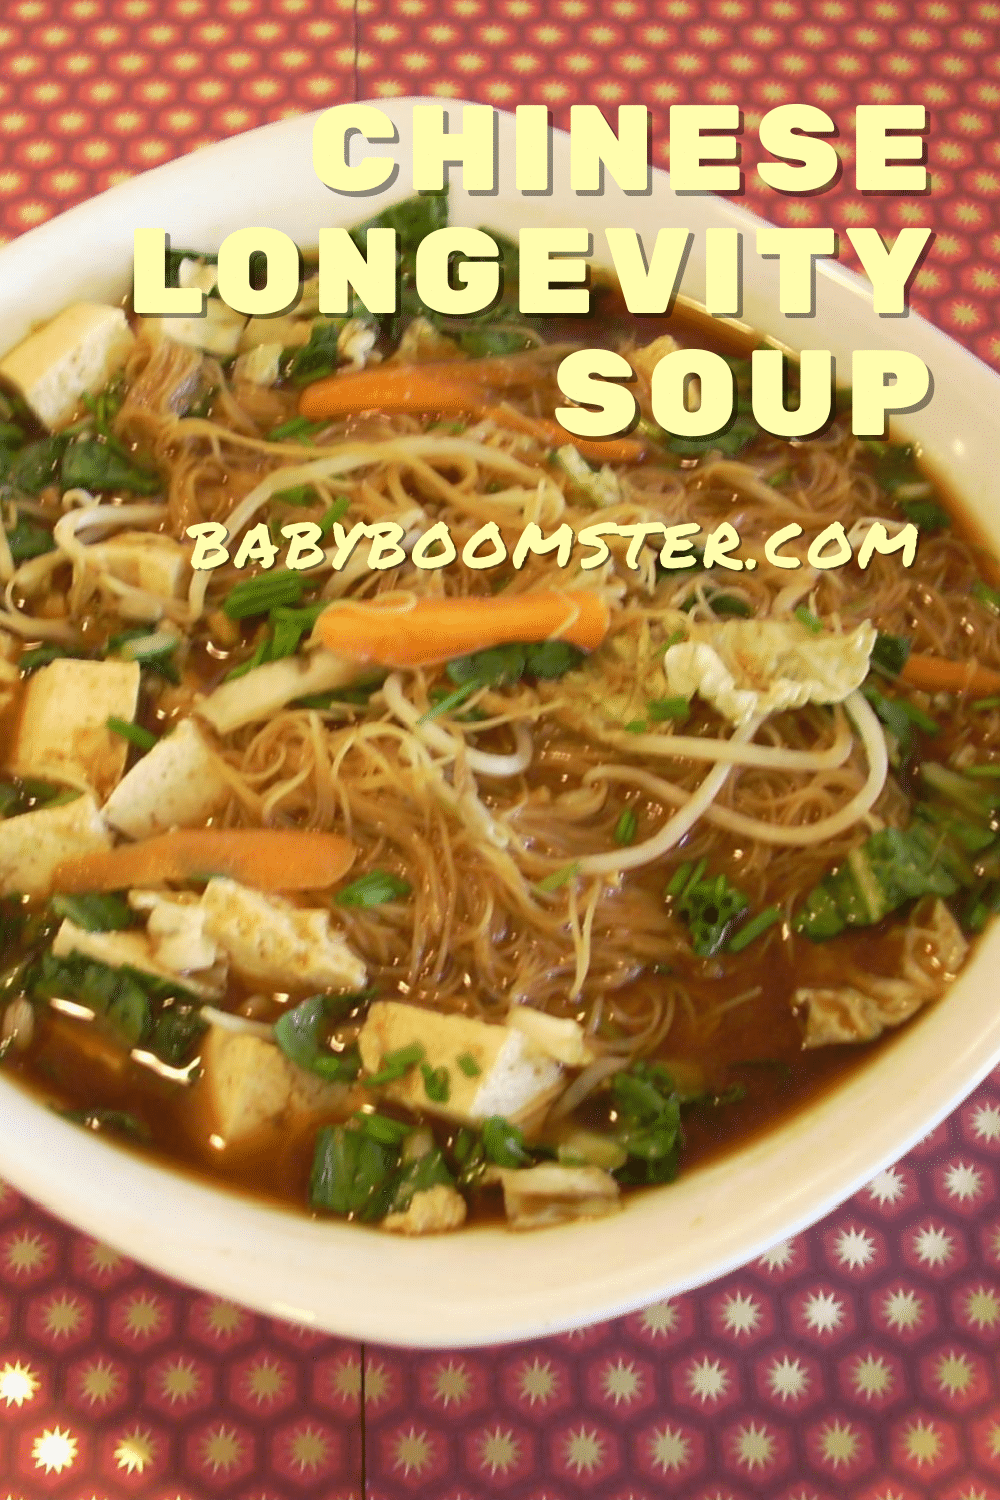 Chinese longevity soup